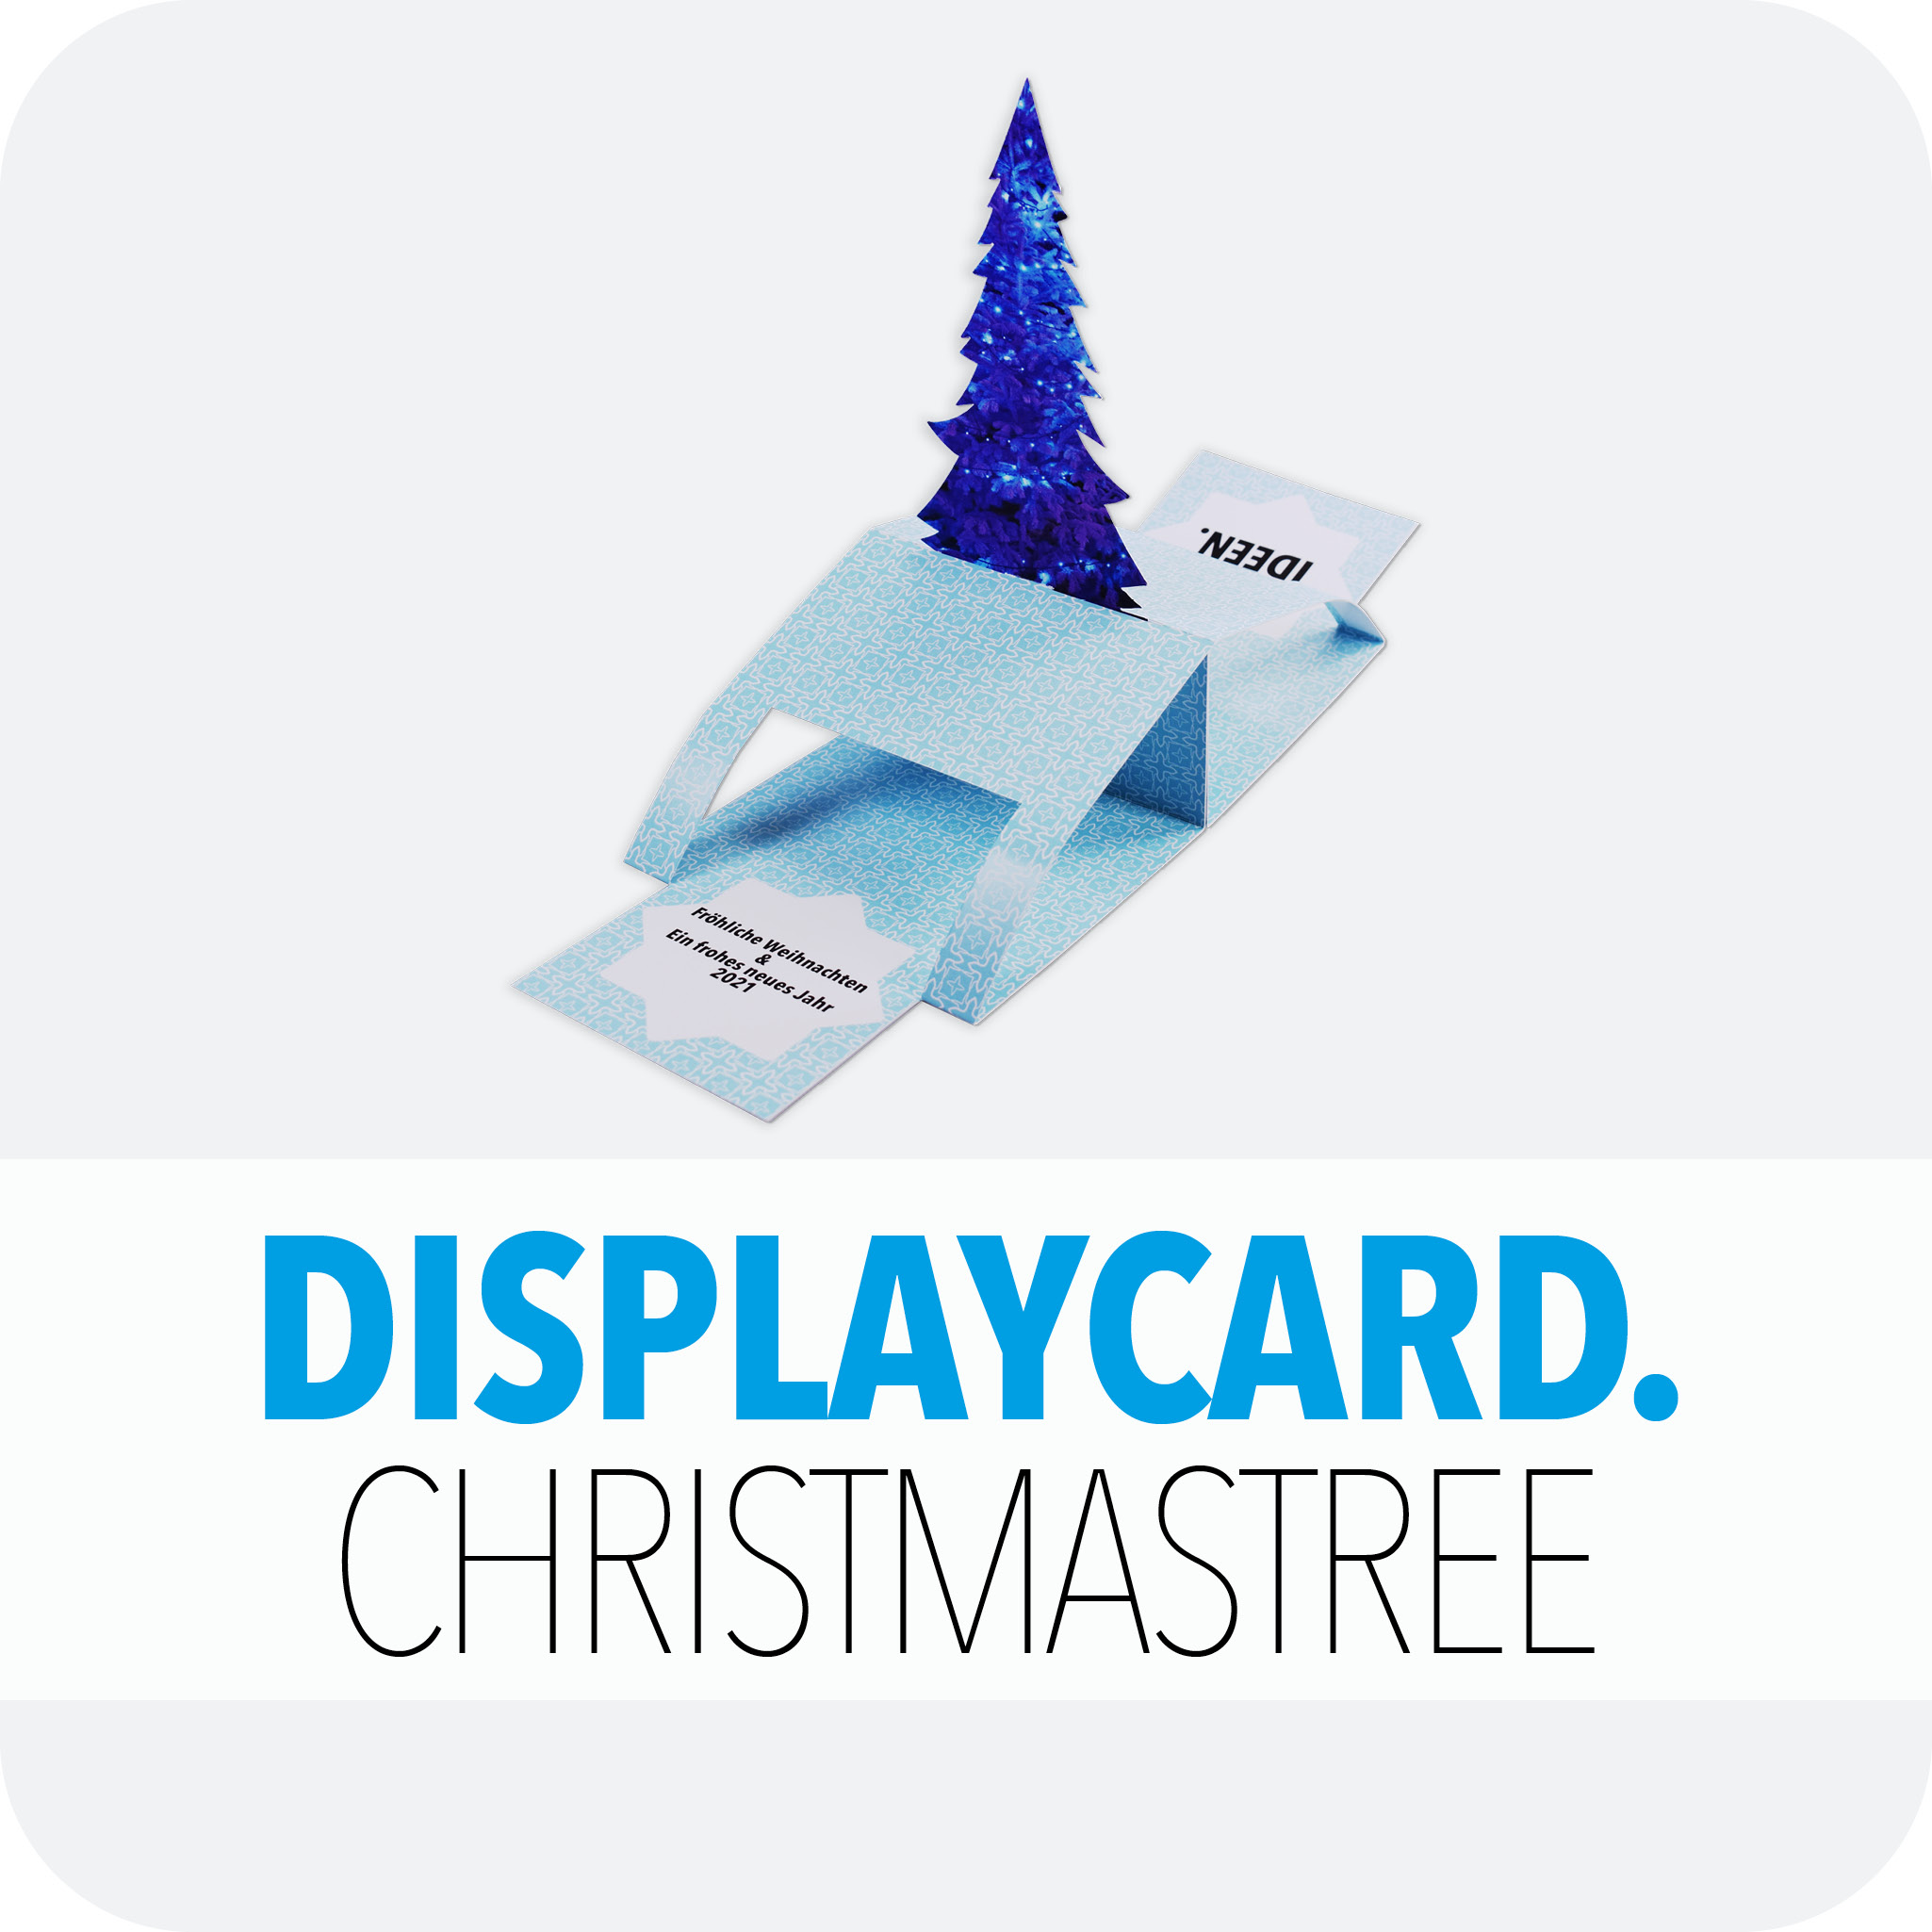 Displaycard Christmas tree